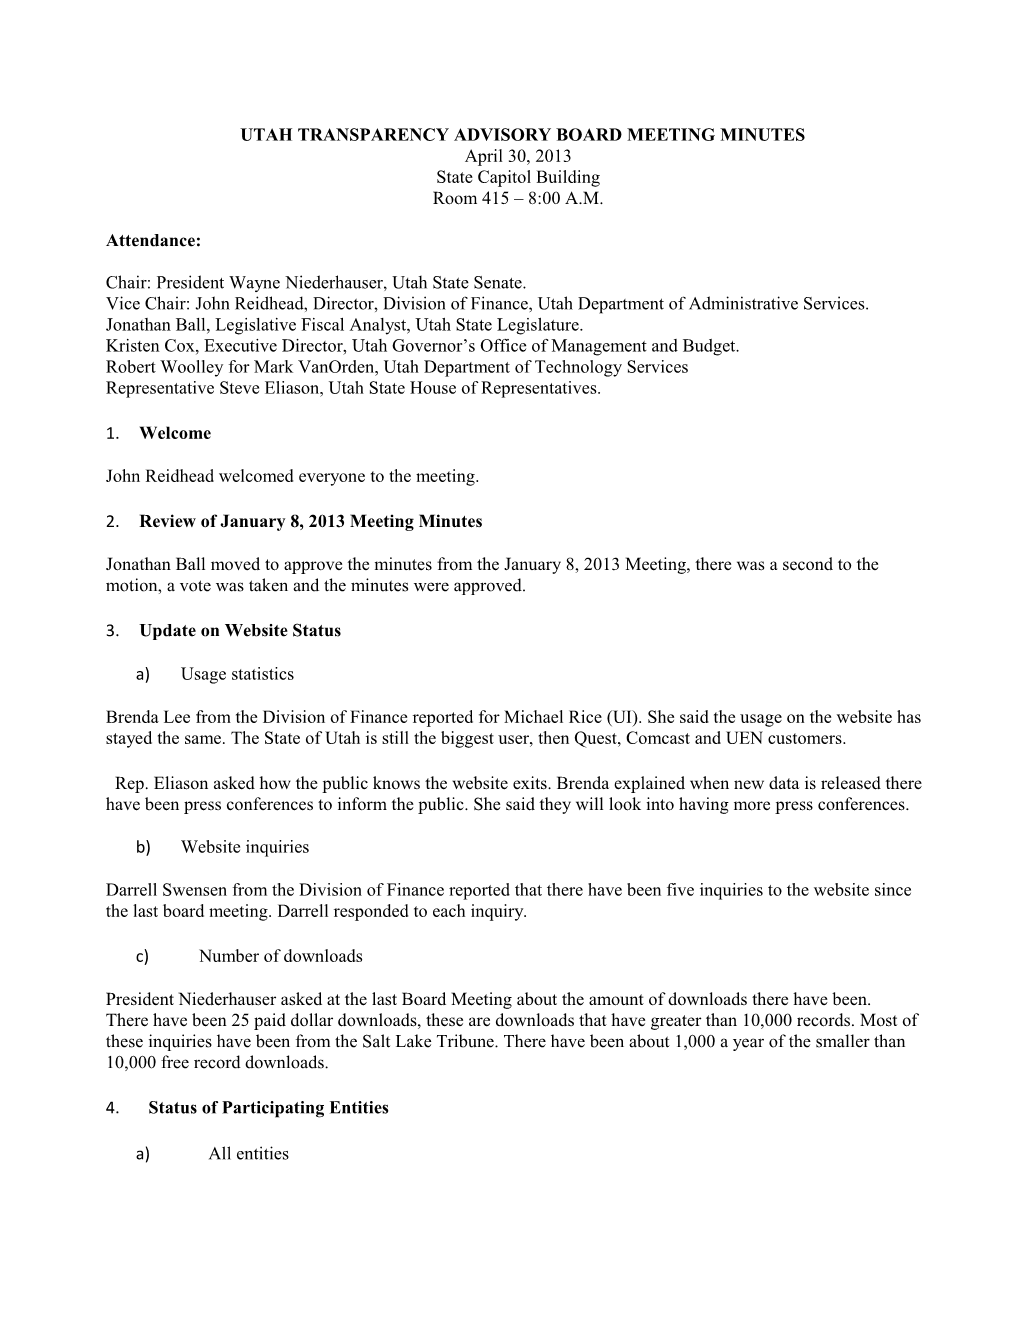 Utah Transparency Advisory Board Meeting Minutes